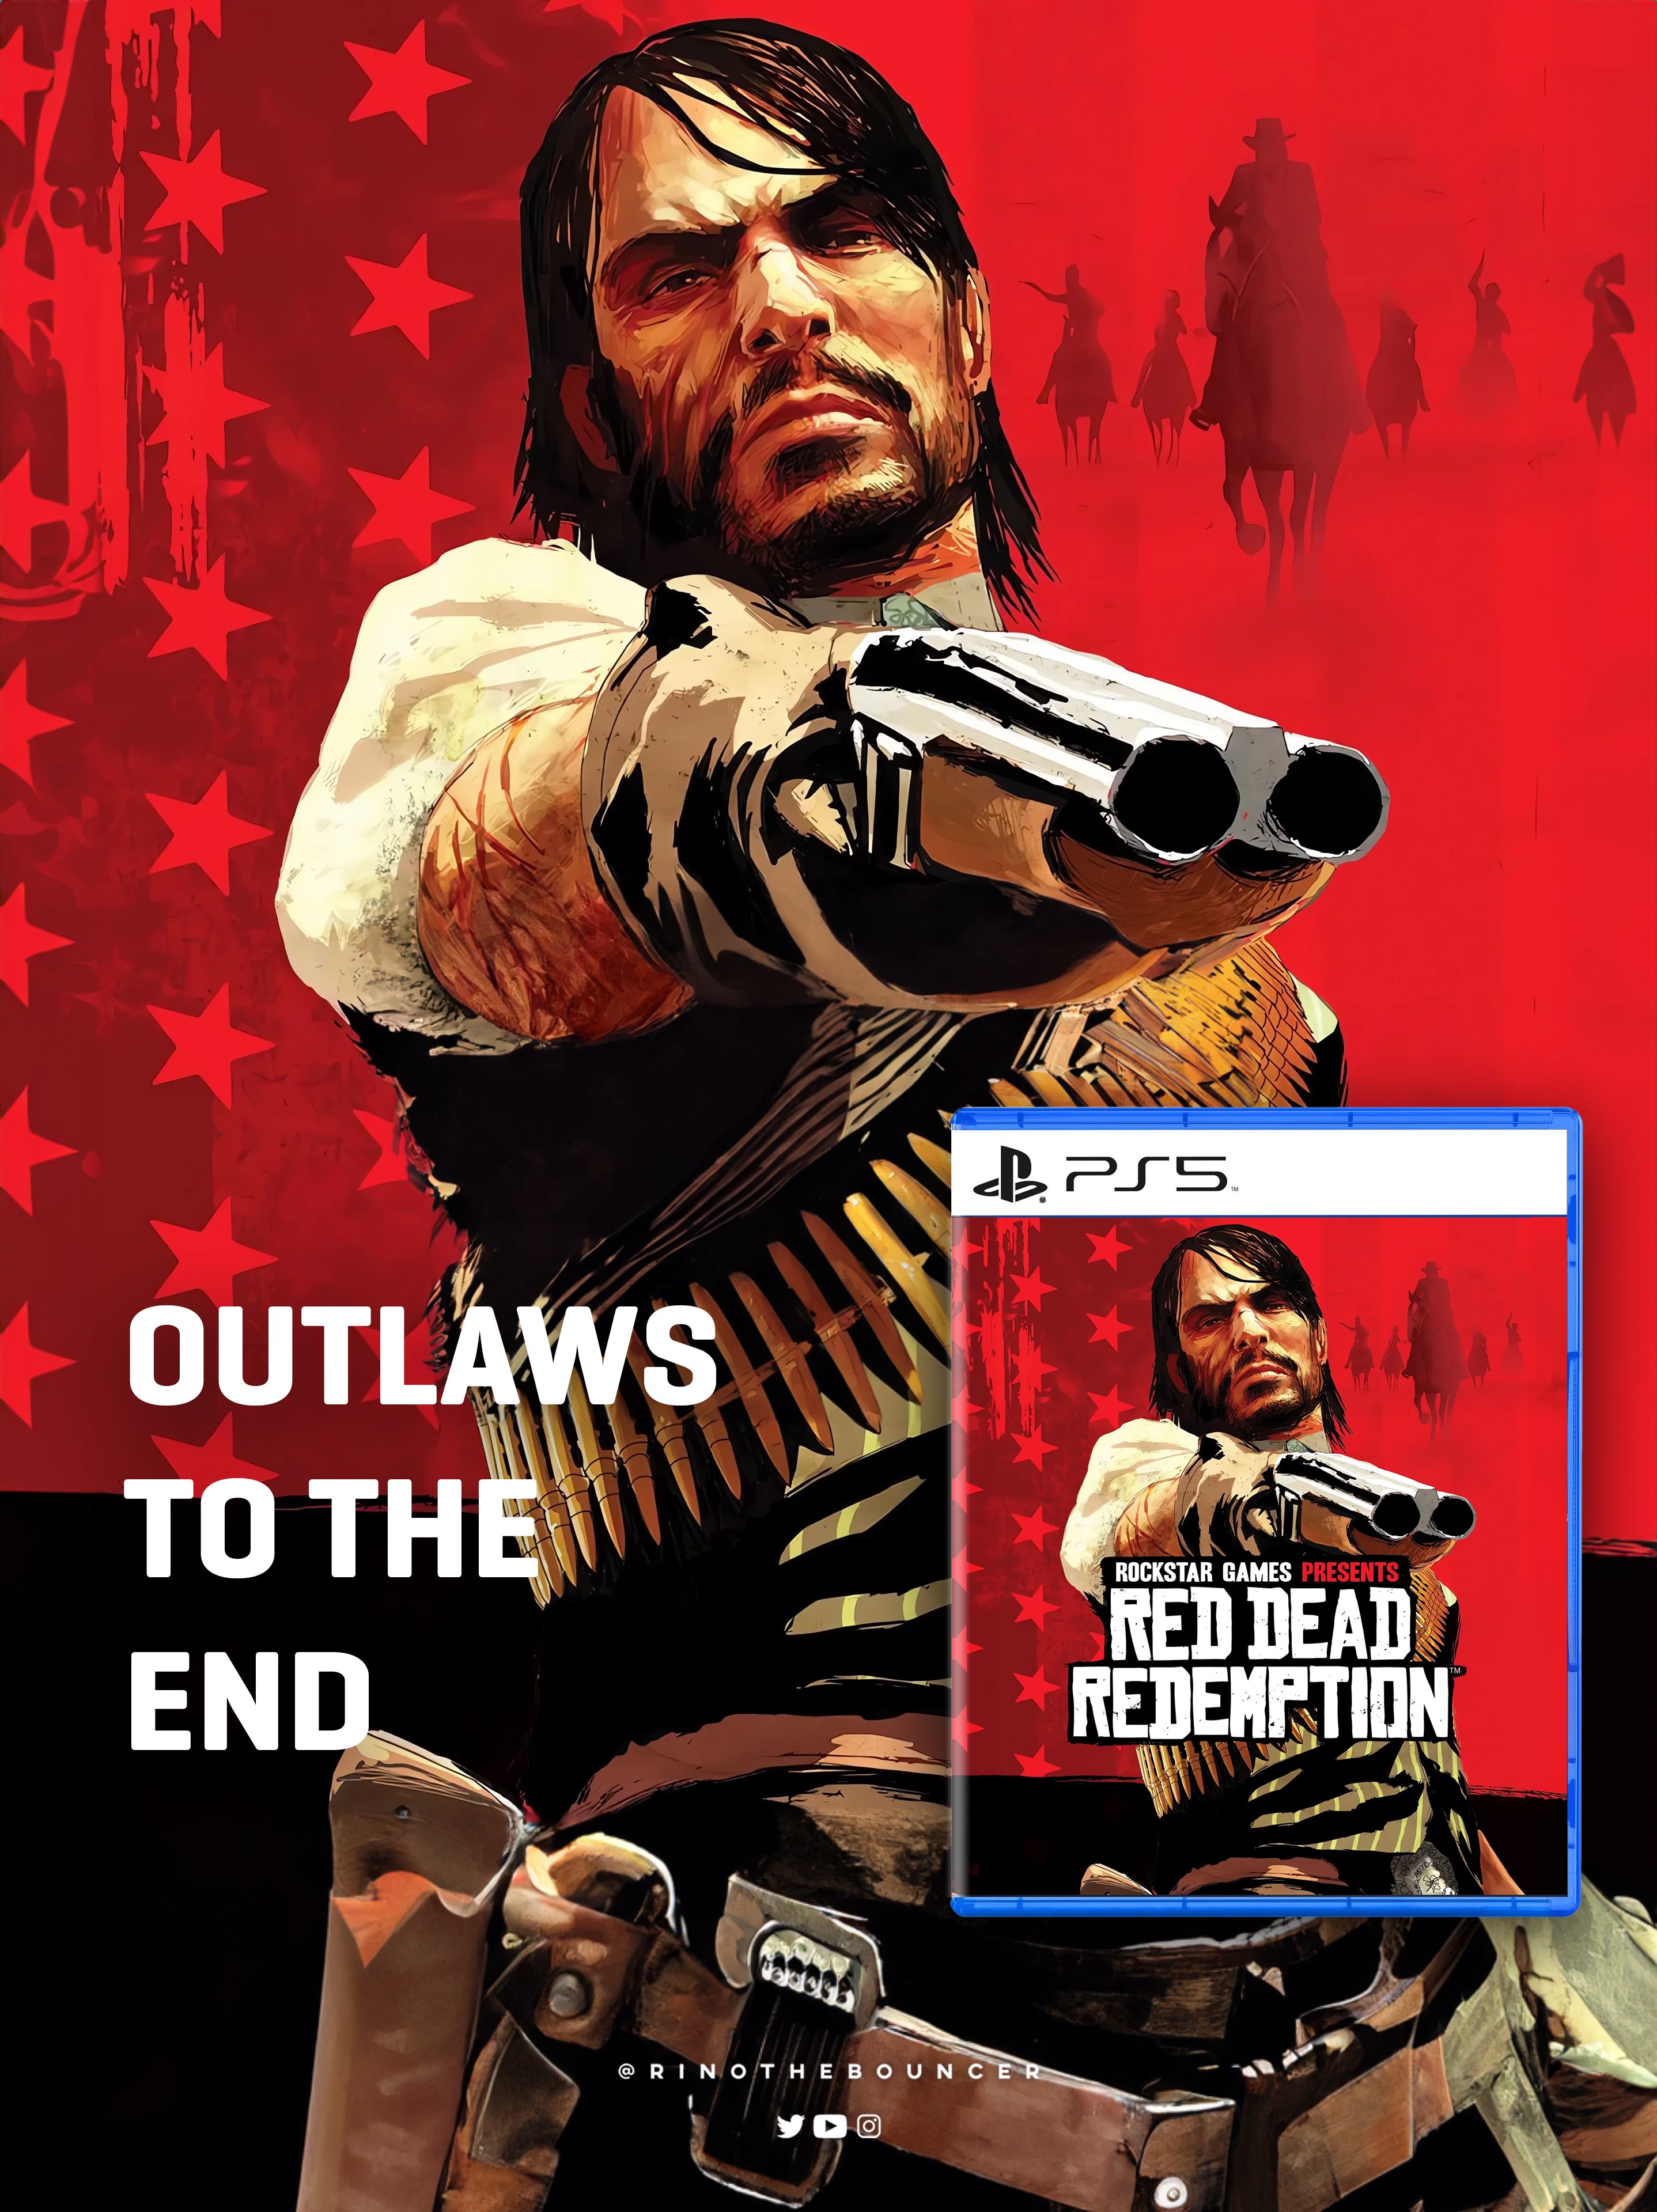 Red Dead Redemption, RDR1